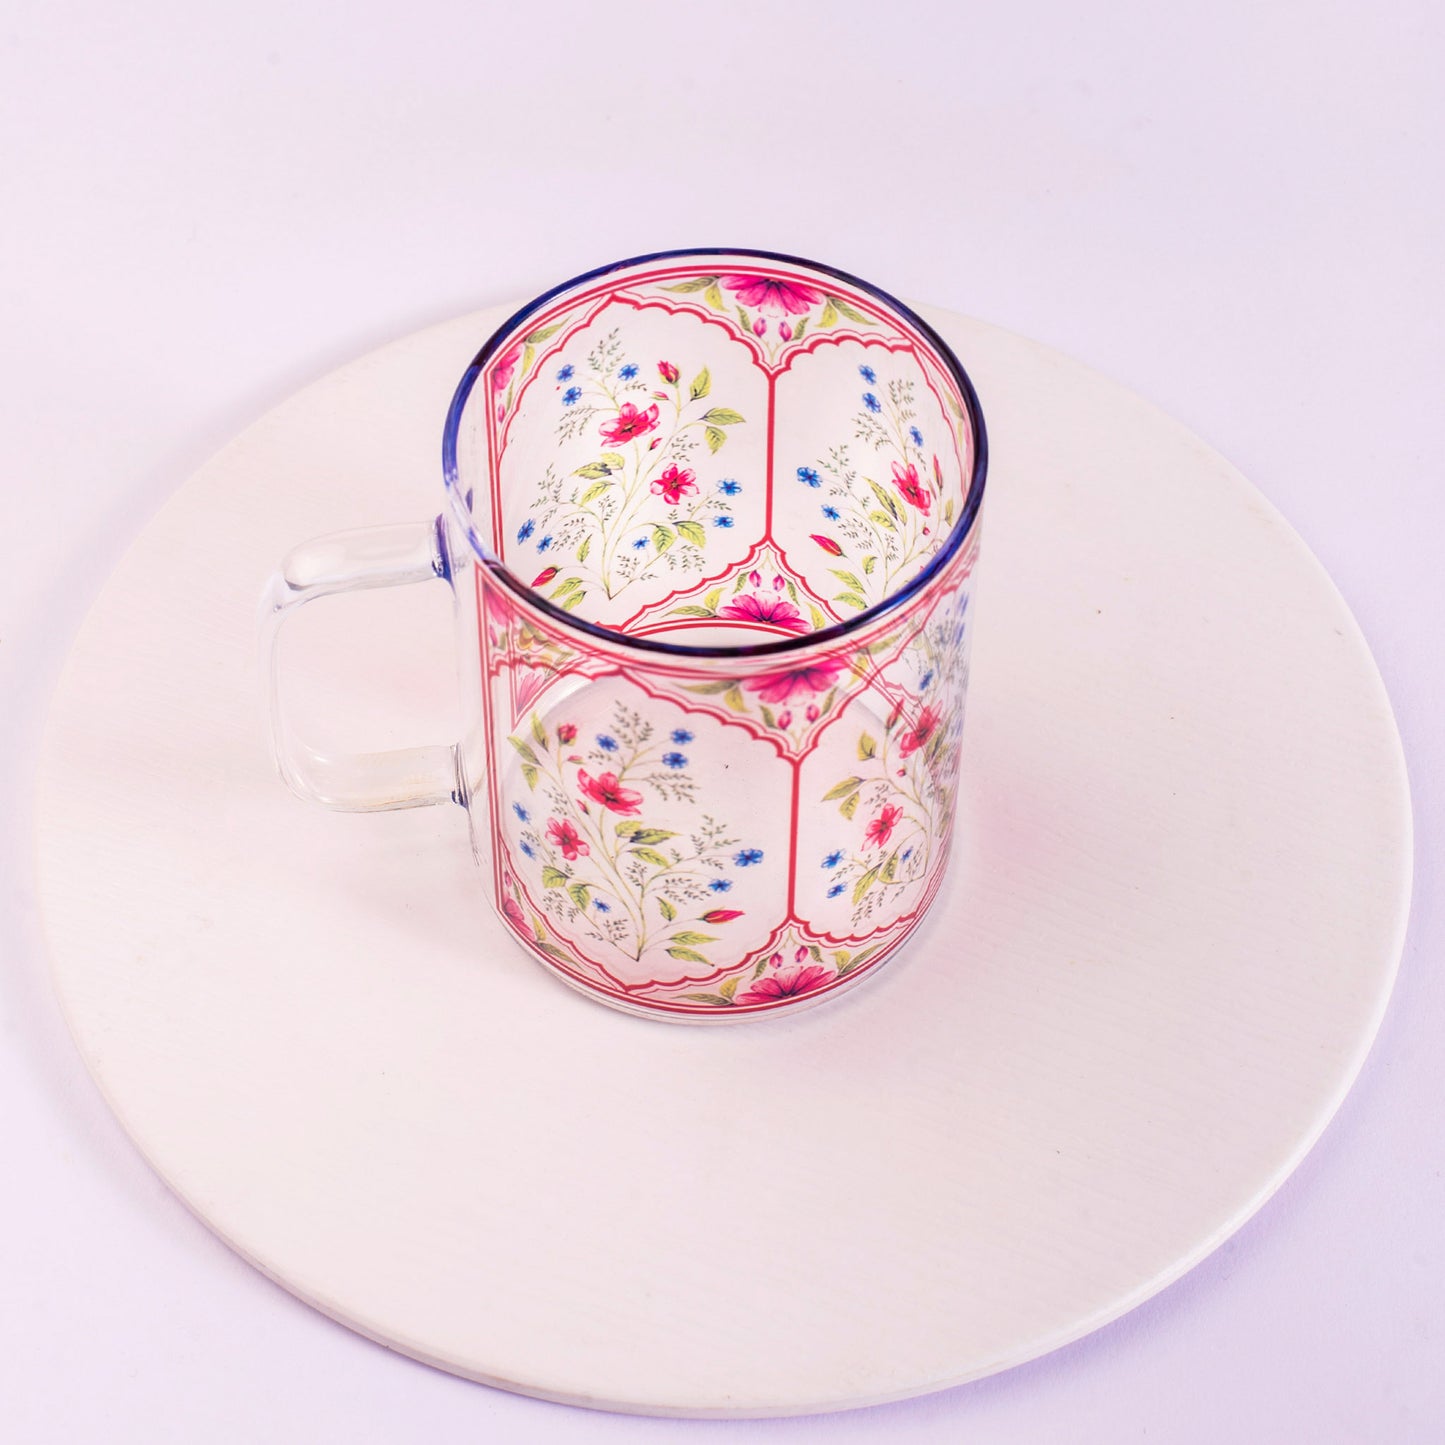 Crimson Blooms Round Coffee/Tea mugs - Set of 2 and 4